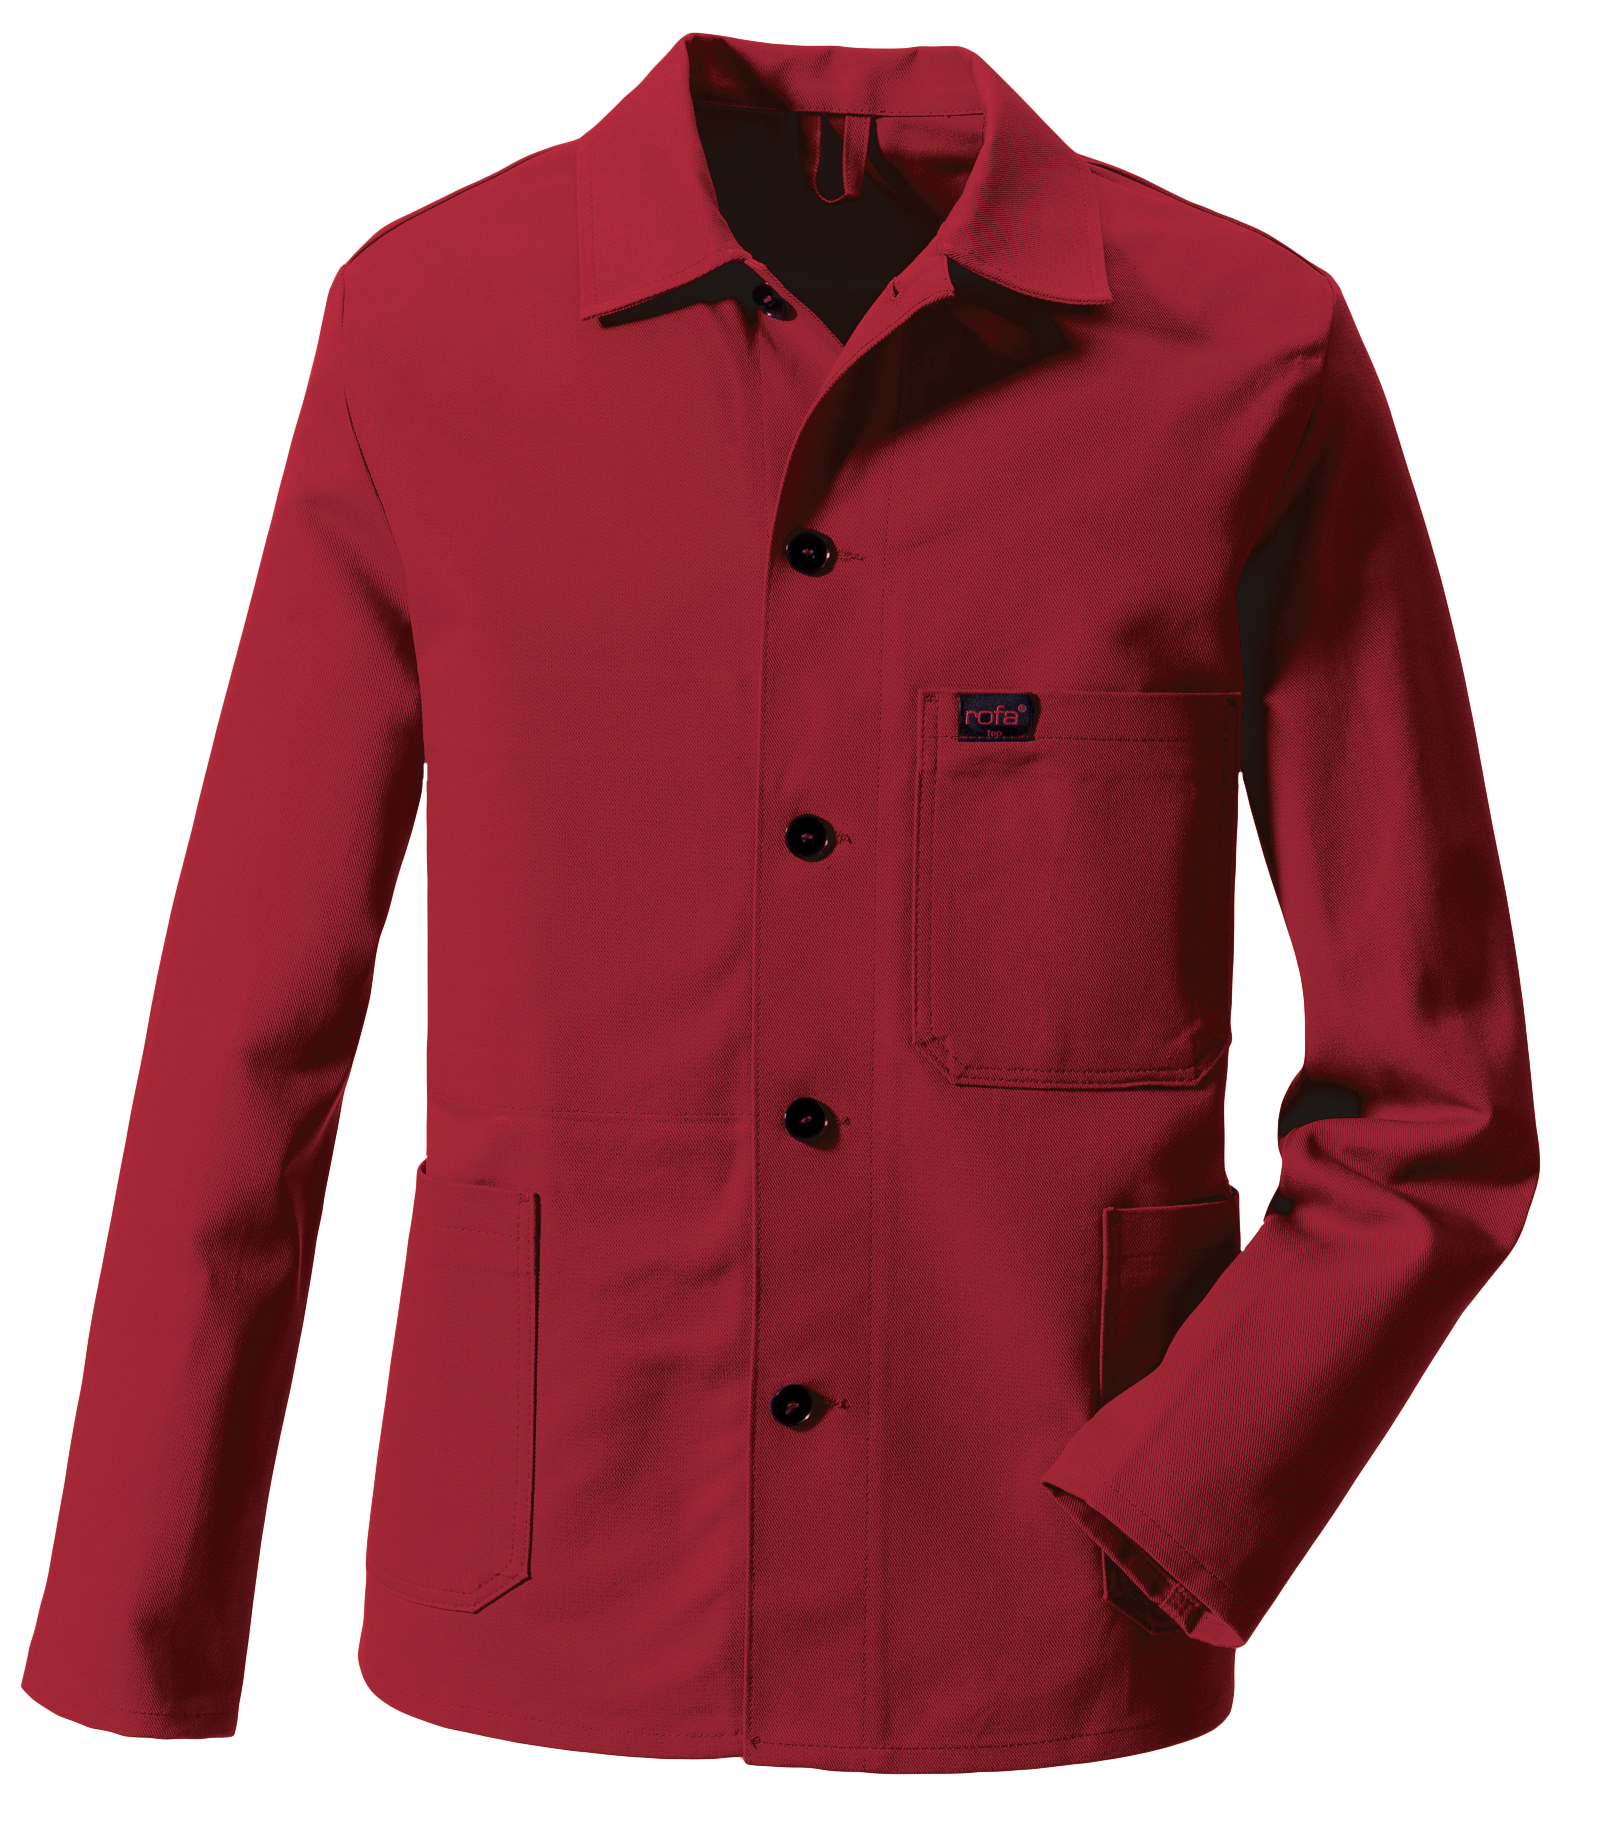 ROFA Jacke Arbeitsjacke Berufsjacke Schutzjacke Arbeitskleidung Berufskleidung weinrot ca 330 g